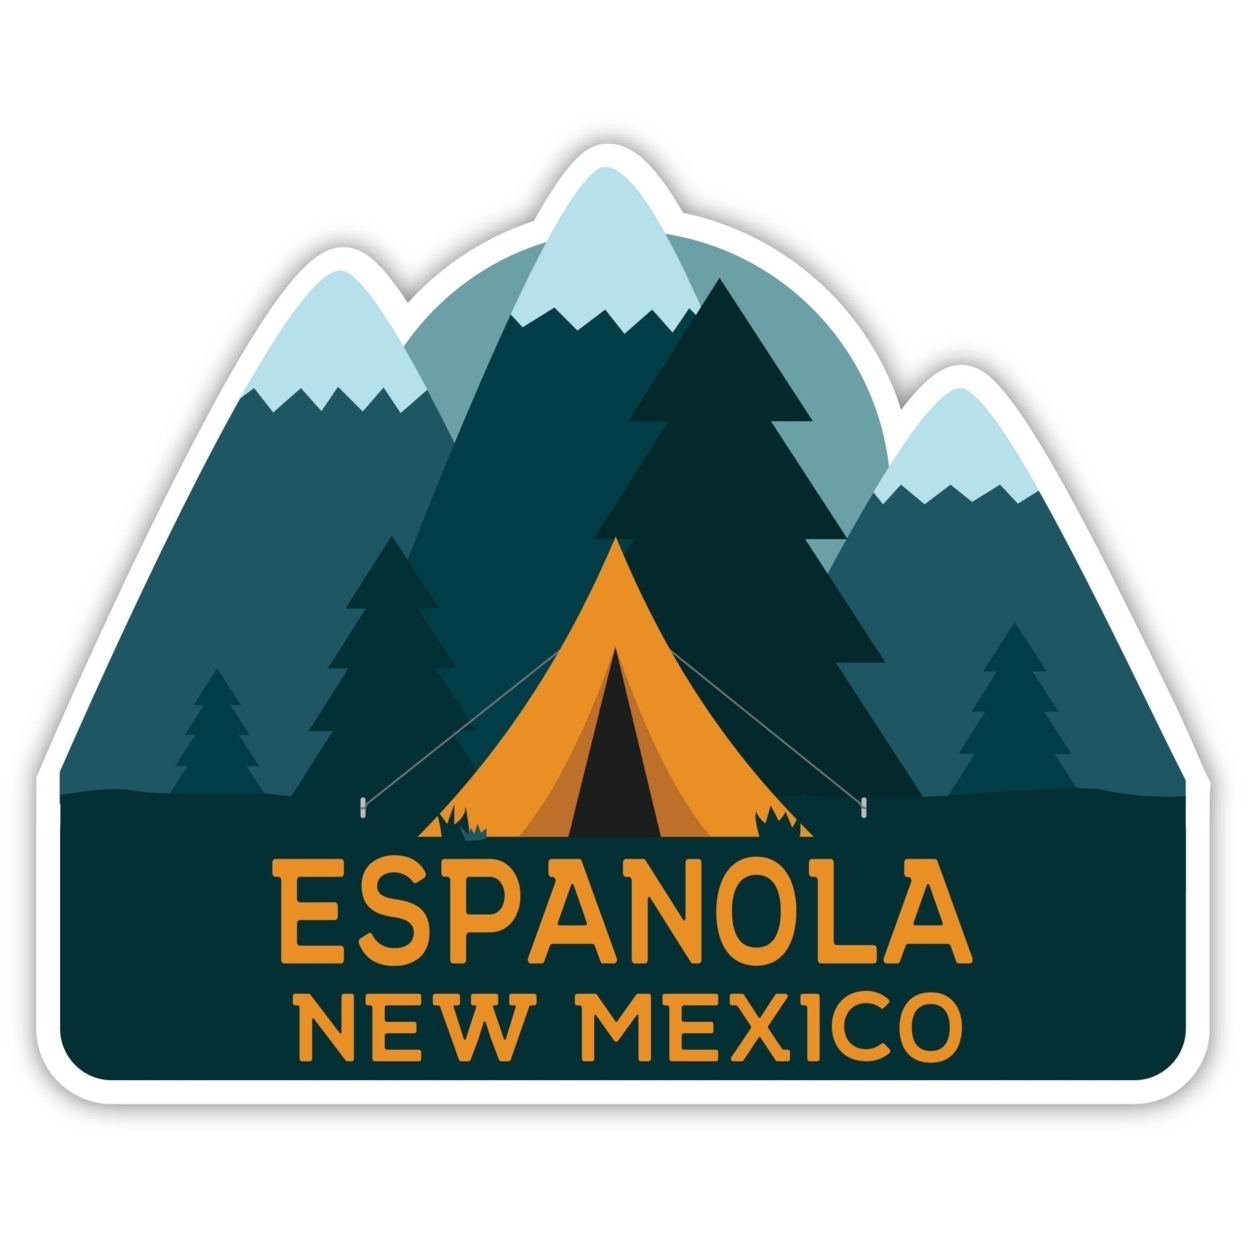 Espanola New Mexico Souvenir Decorative Stickers (Choose Theme And Size) - Single Unit, 8-Inch, Tent